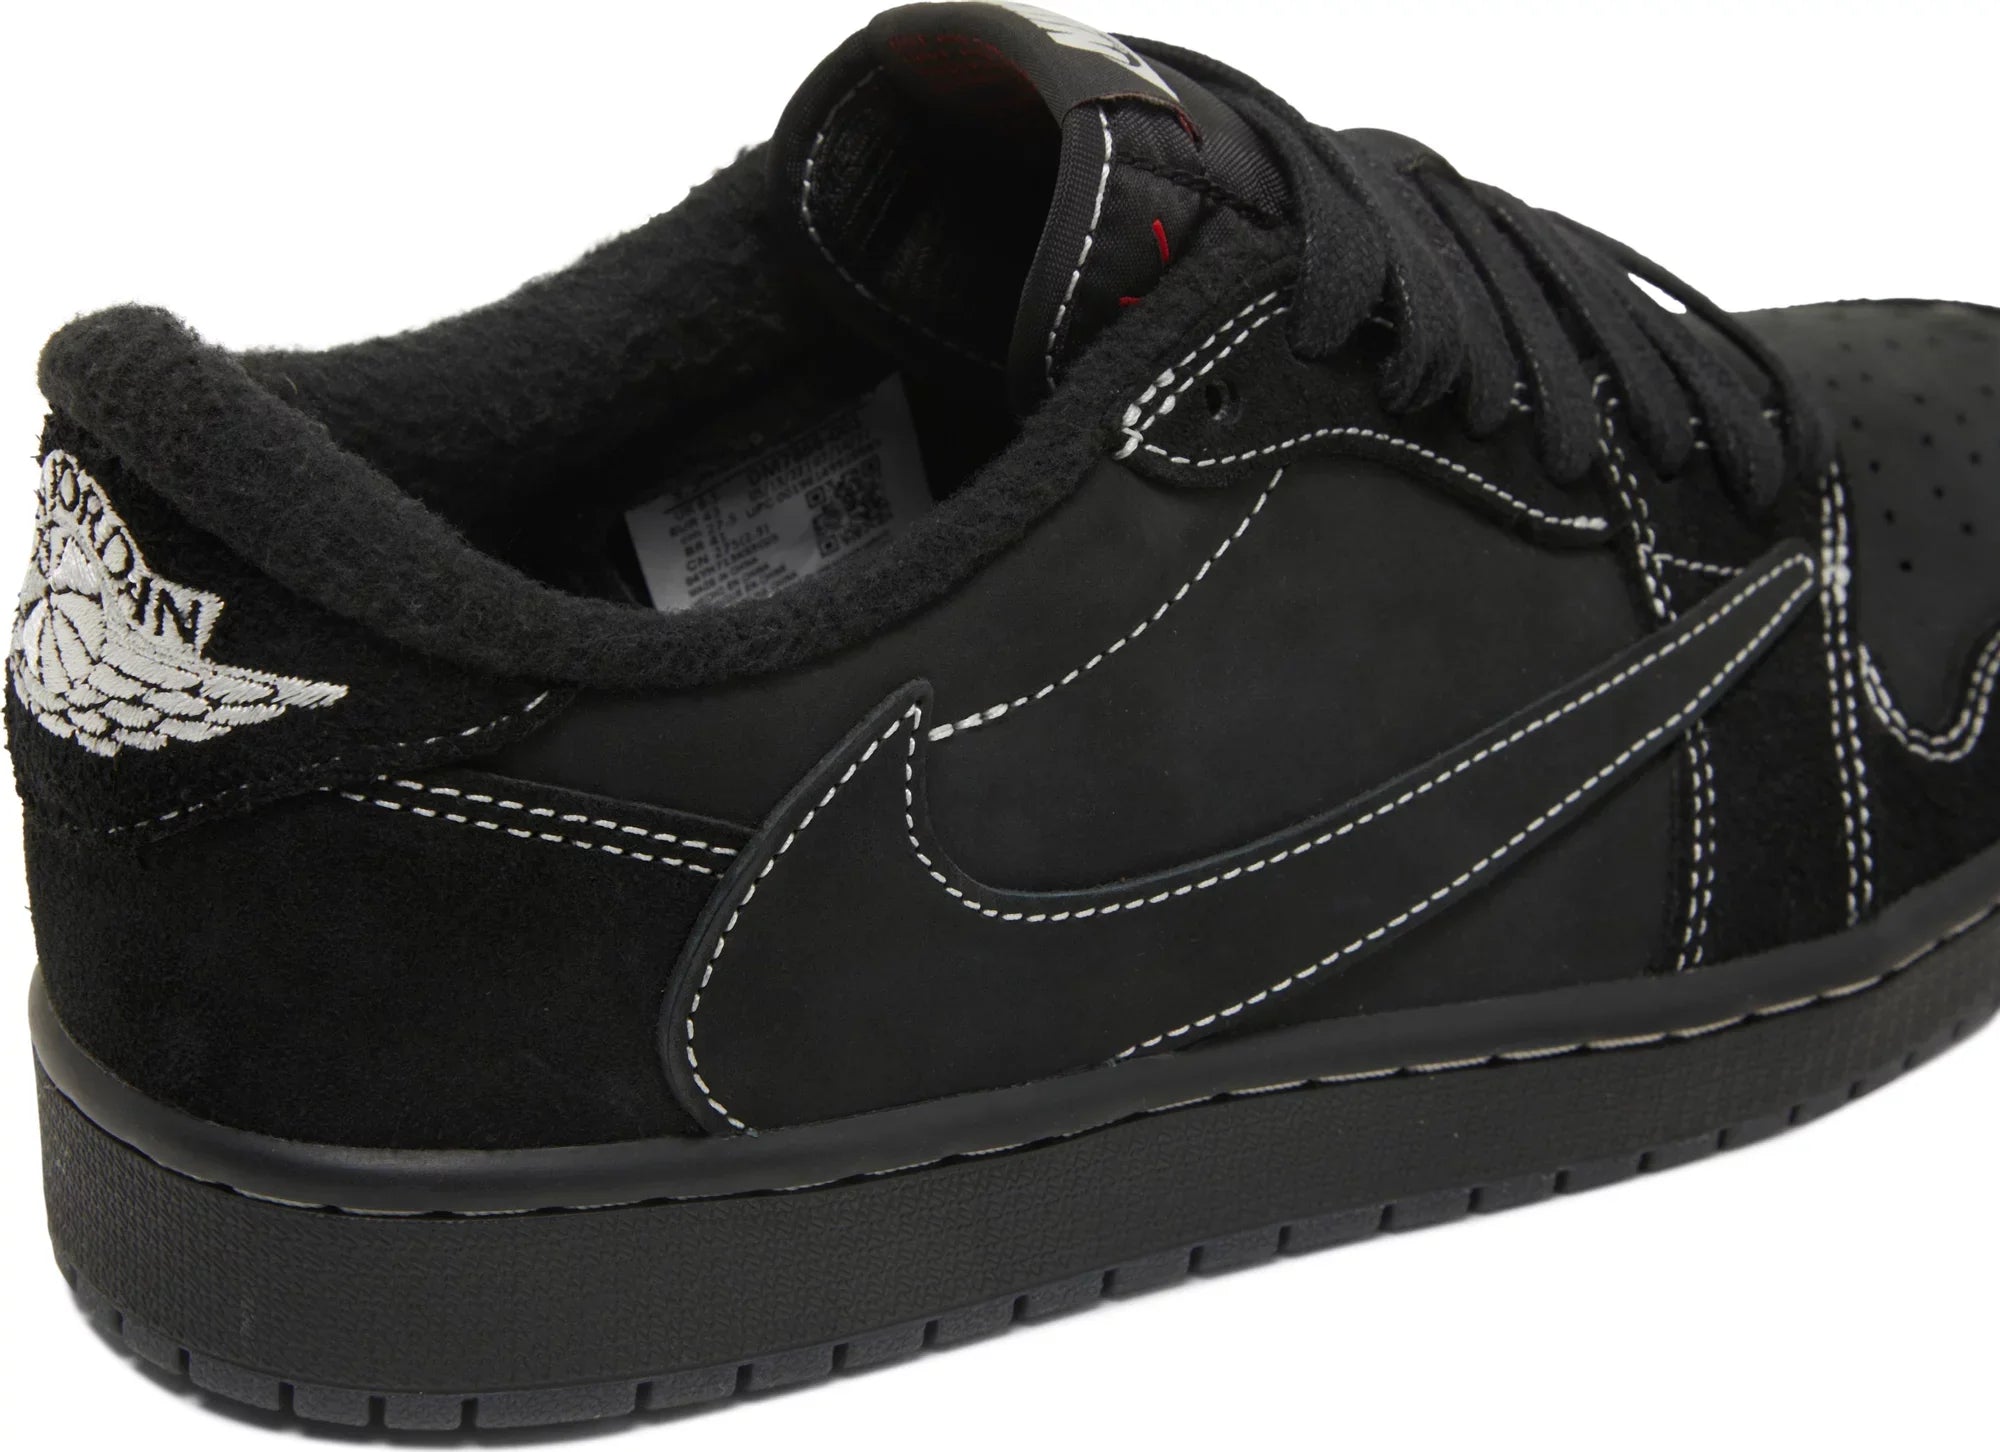 Travis Scott x Air Jordan 1 Low OG SP 'Black Phantom' Sneakers for Men - GENUINE AUTHENTIC BRAND LLC